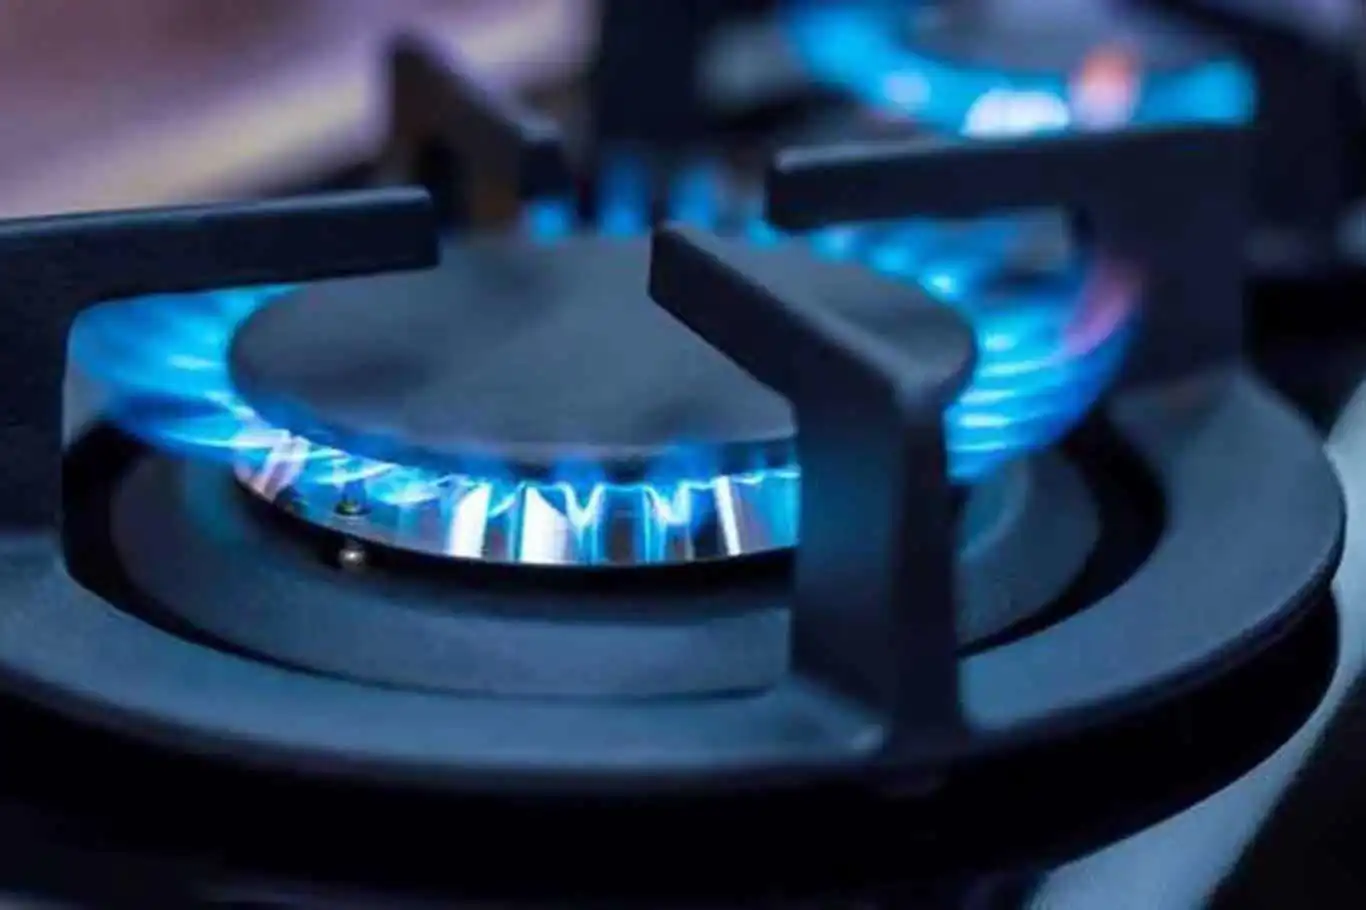 Natural gas dominates home energy use in Türkiye, survey finds